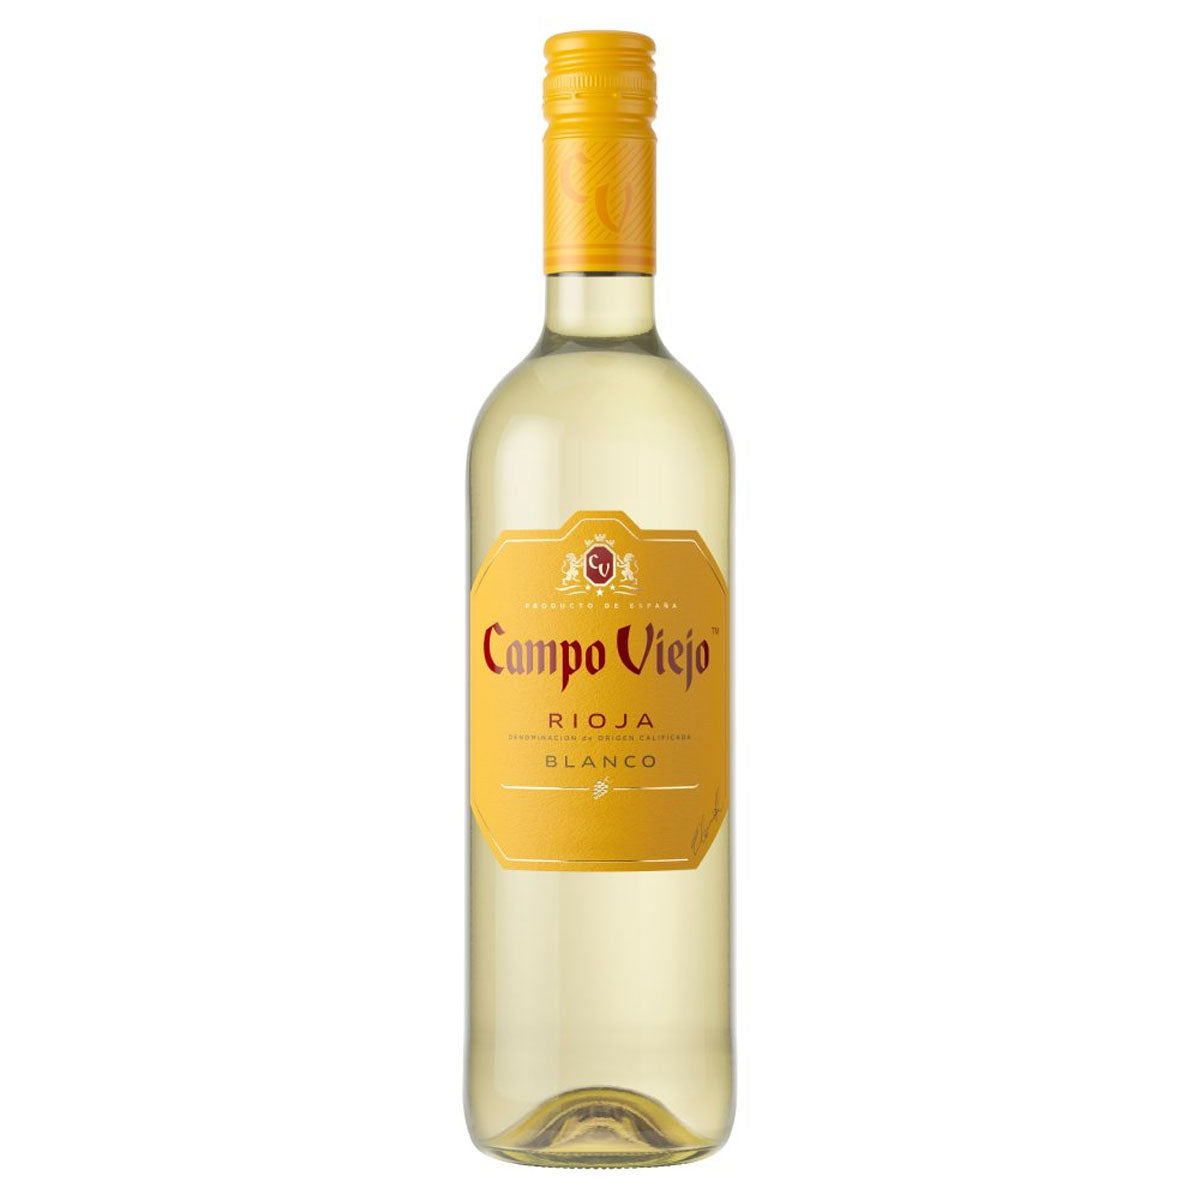 A bottle of Campo Viejo - Rioja Blanco White Wine (12.5% ABV) - 750ml on a white background.